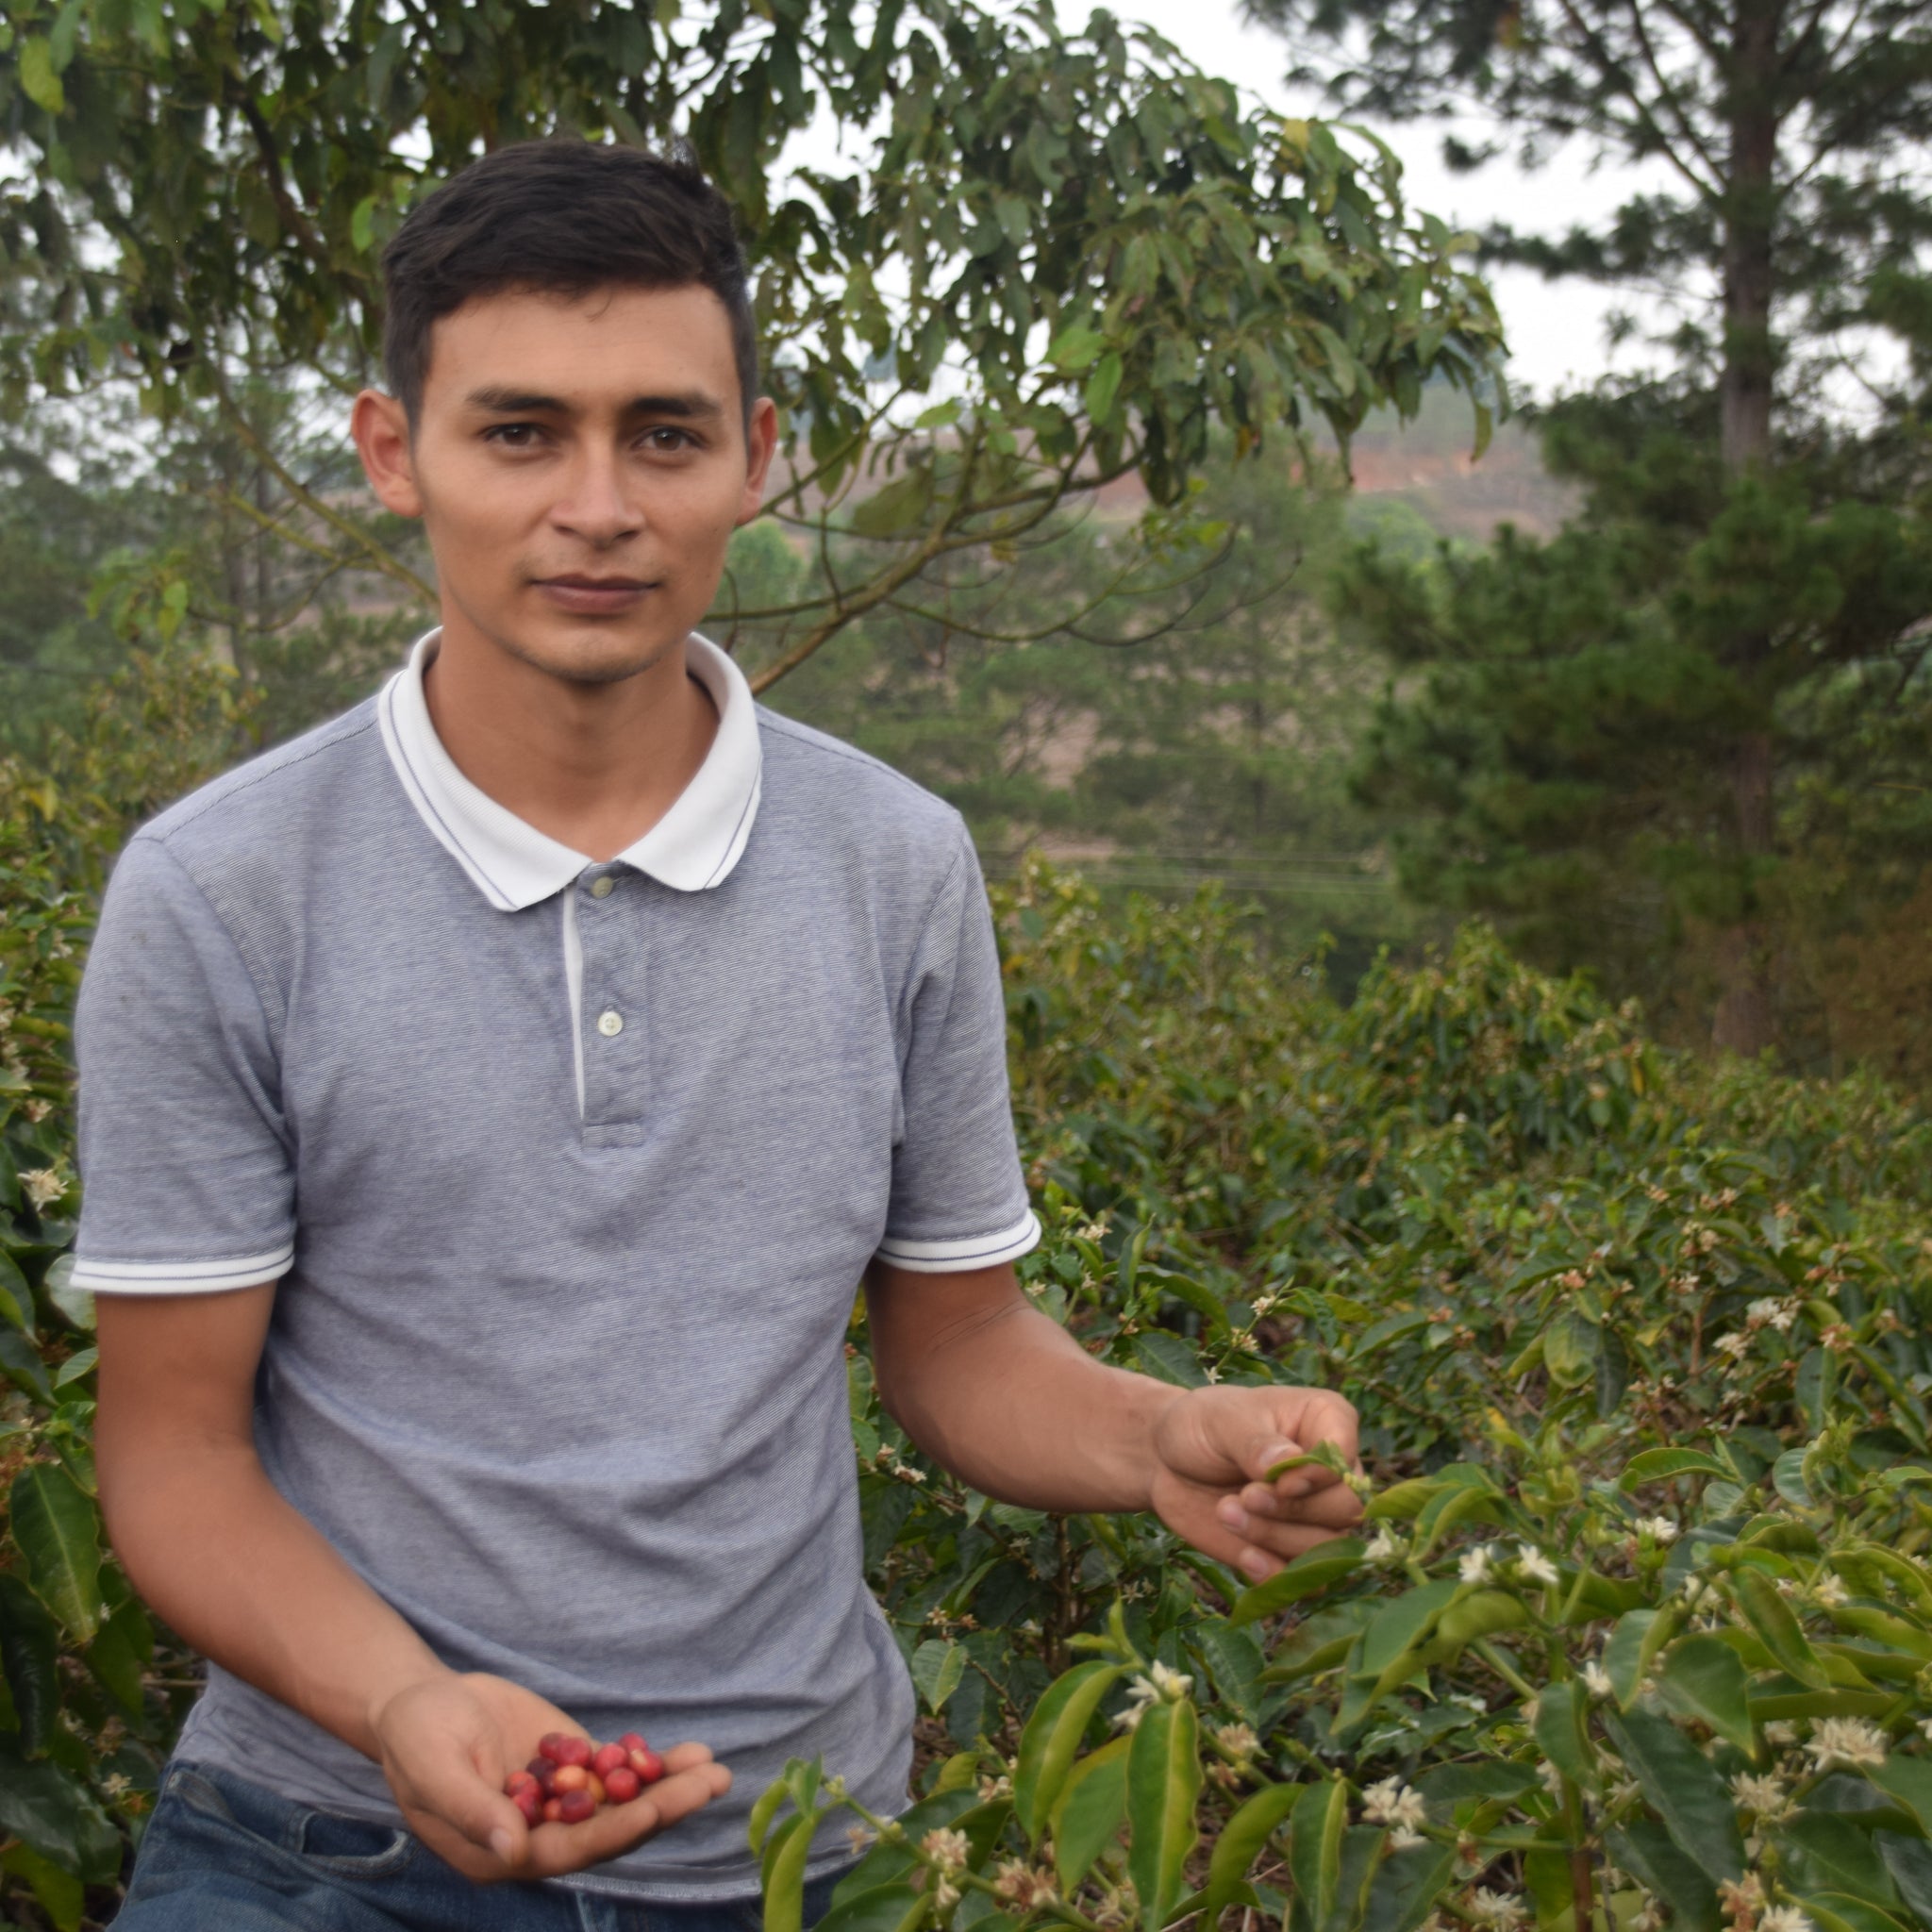 Honduran coffee farmer, Edil Adonis Benitez holding ripe coffee cherries.